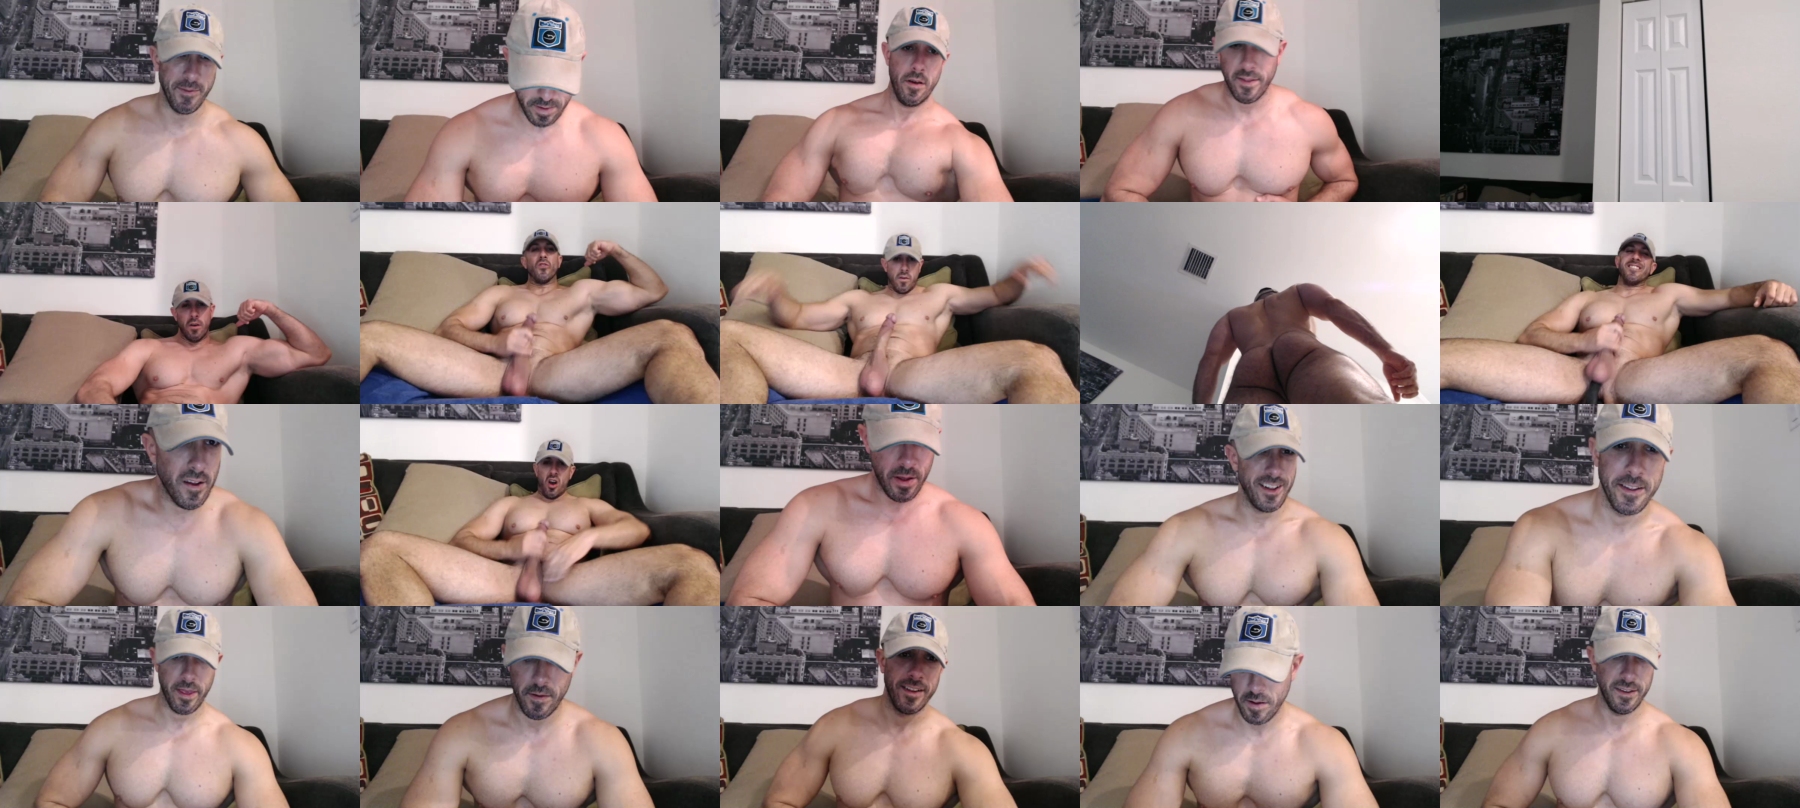 Nerdmuscles2x  25-09-2021 Male Video